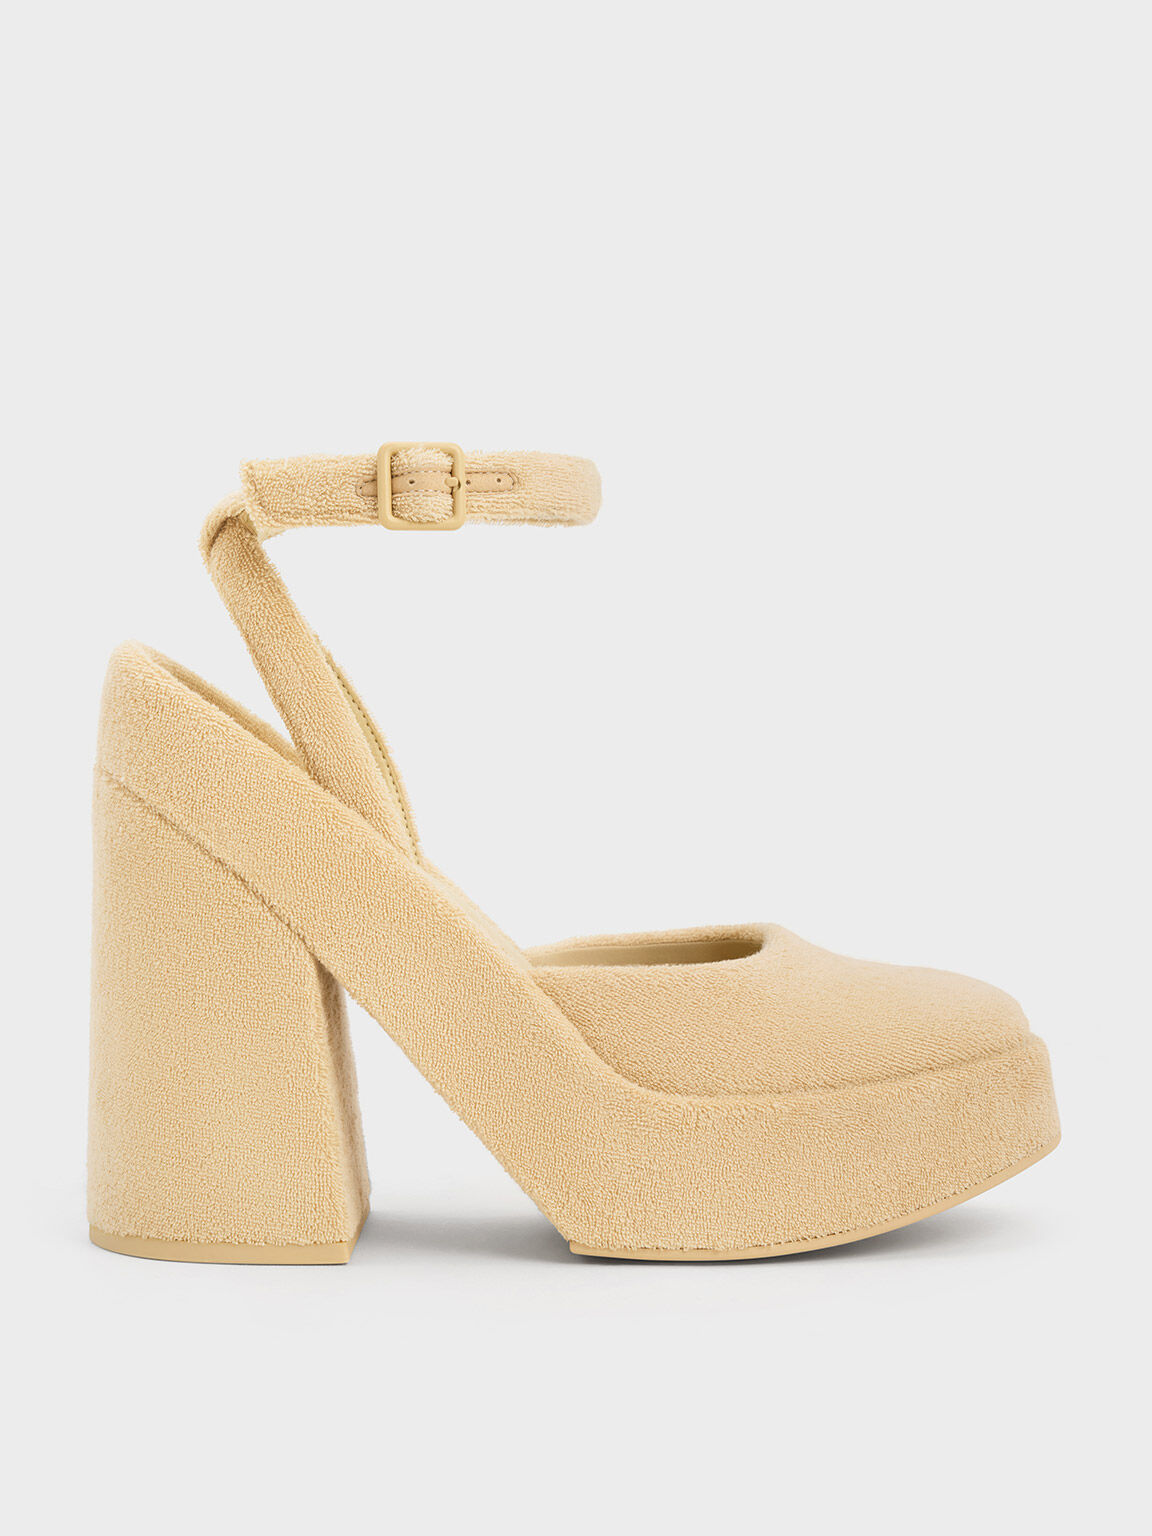 WOMAN – BEIGE peep-toe high heel | miMaO ®